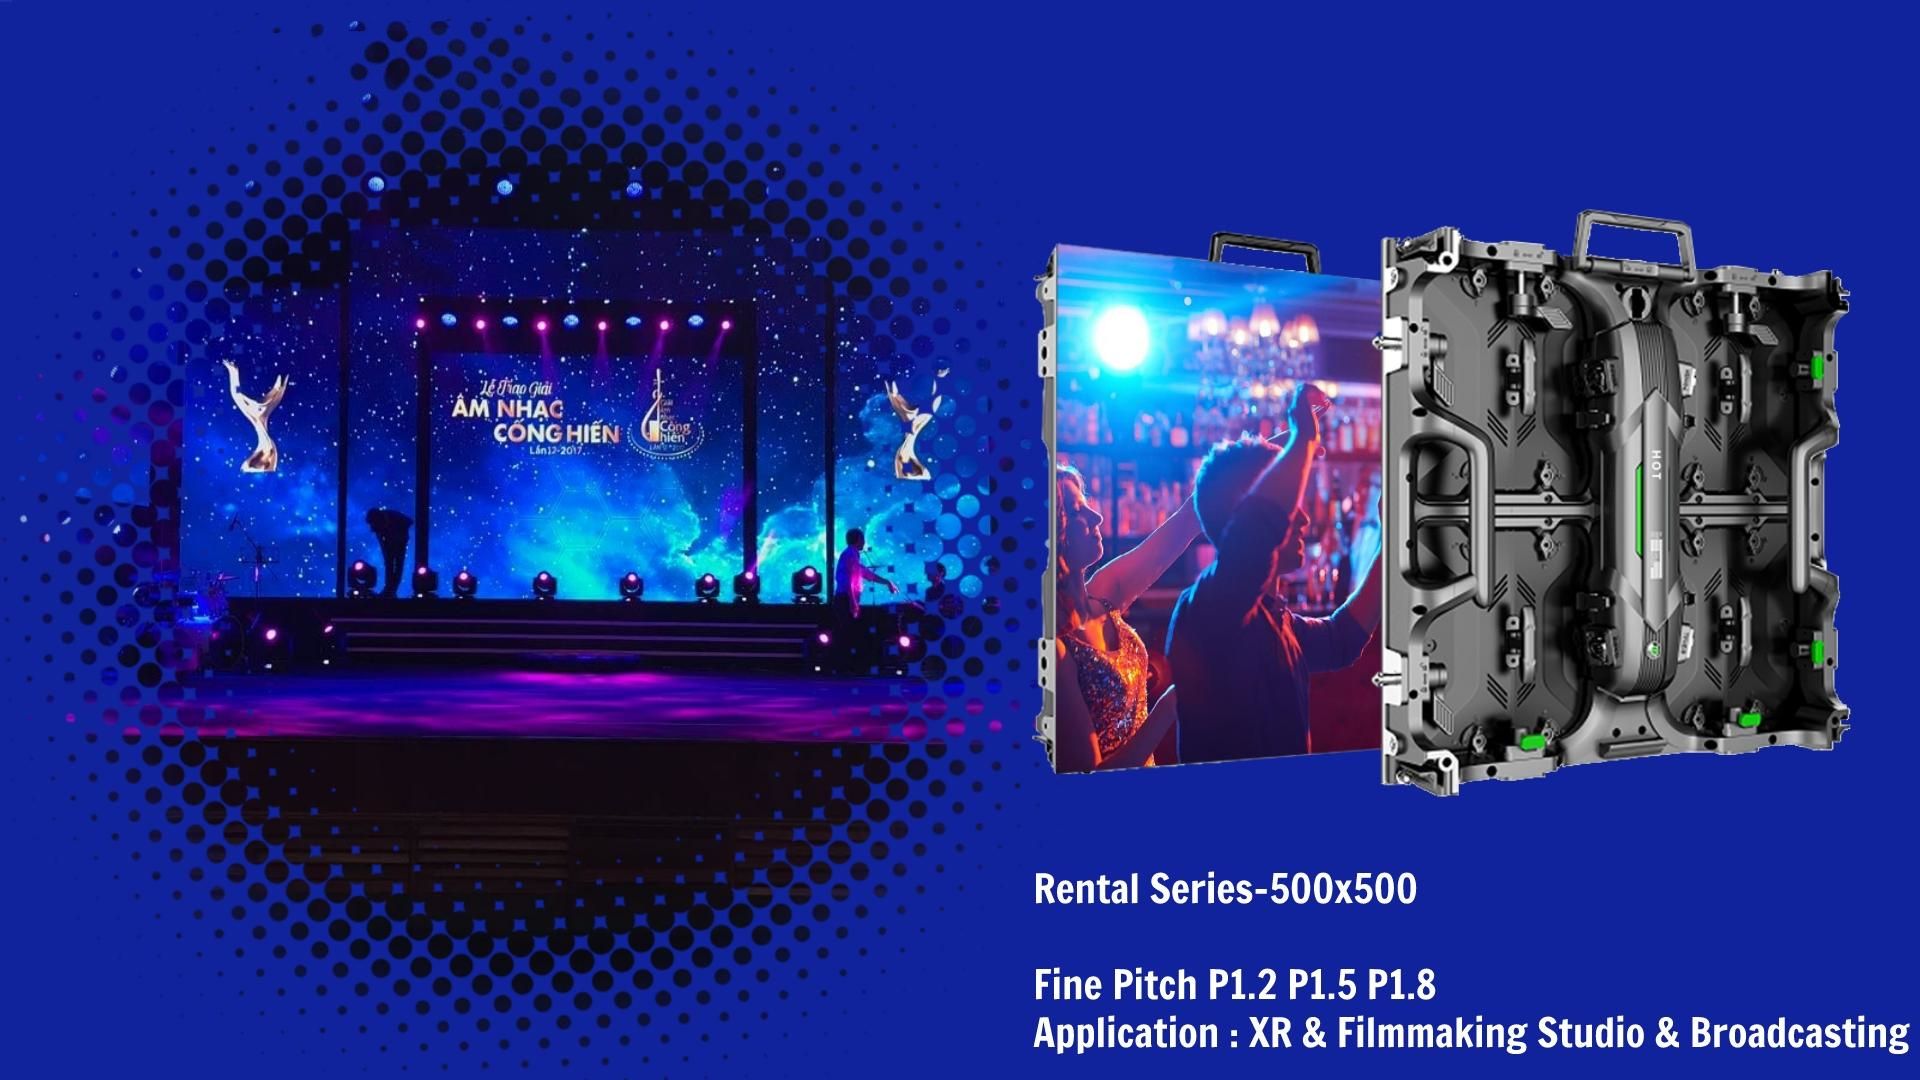 3-fine pixel pitch P1.2 P1.5 P1.8 rental led display